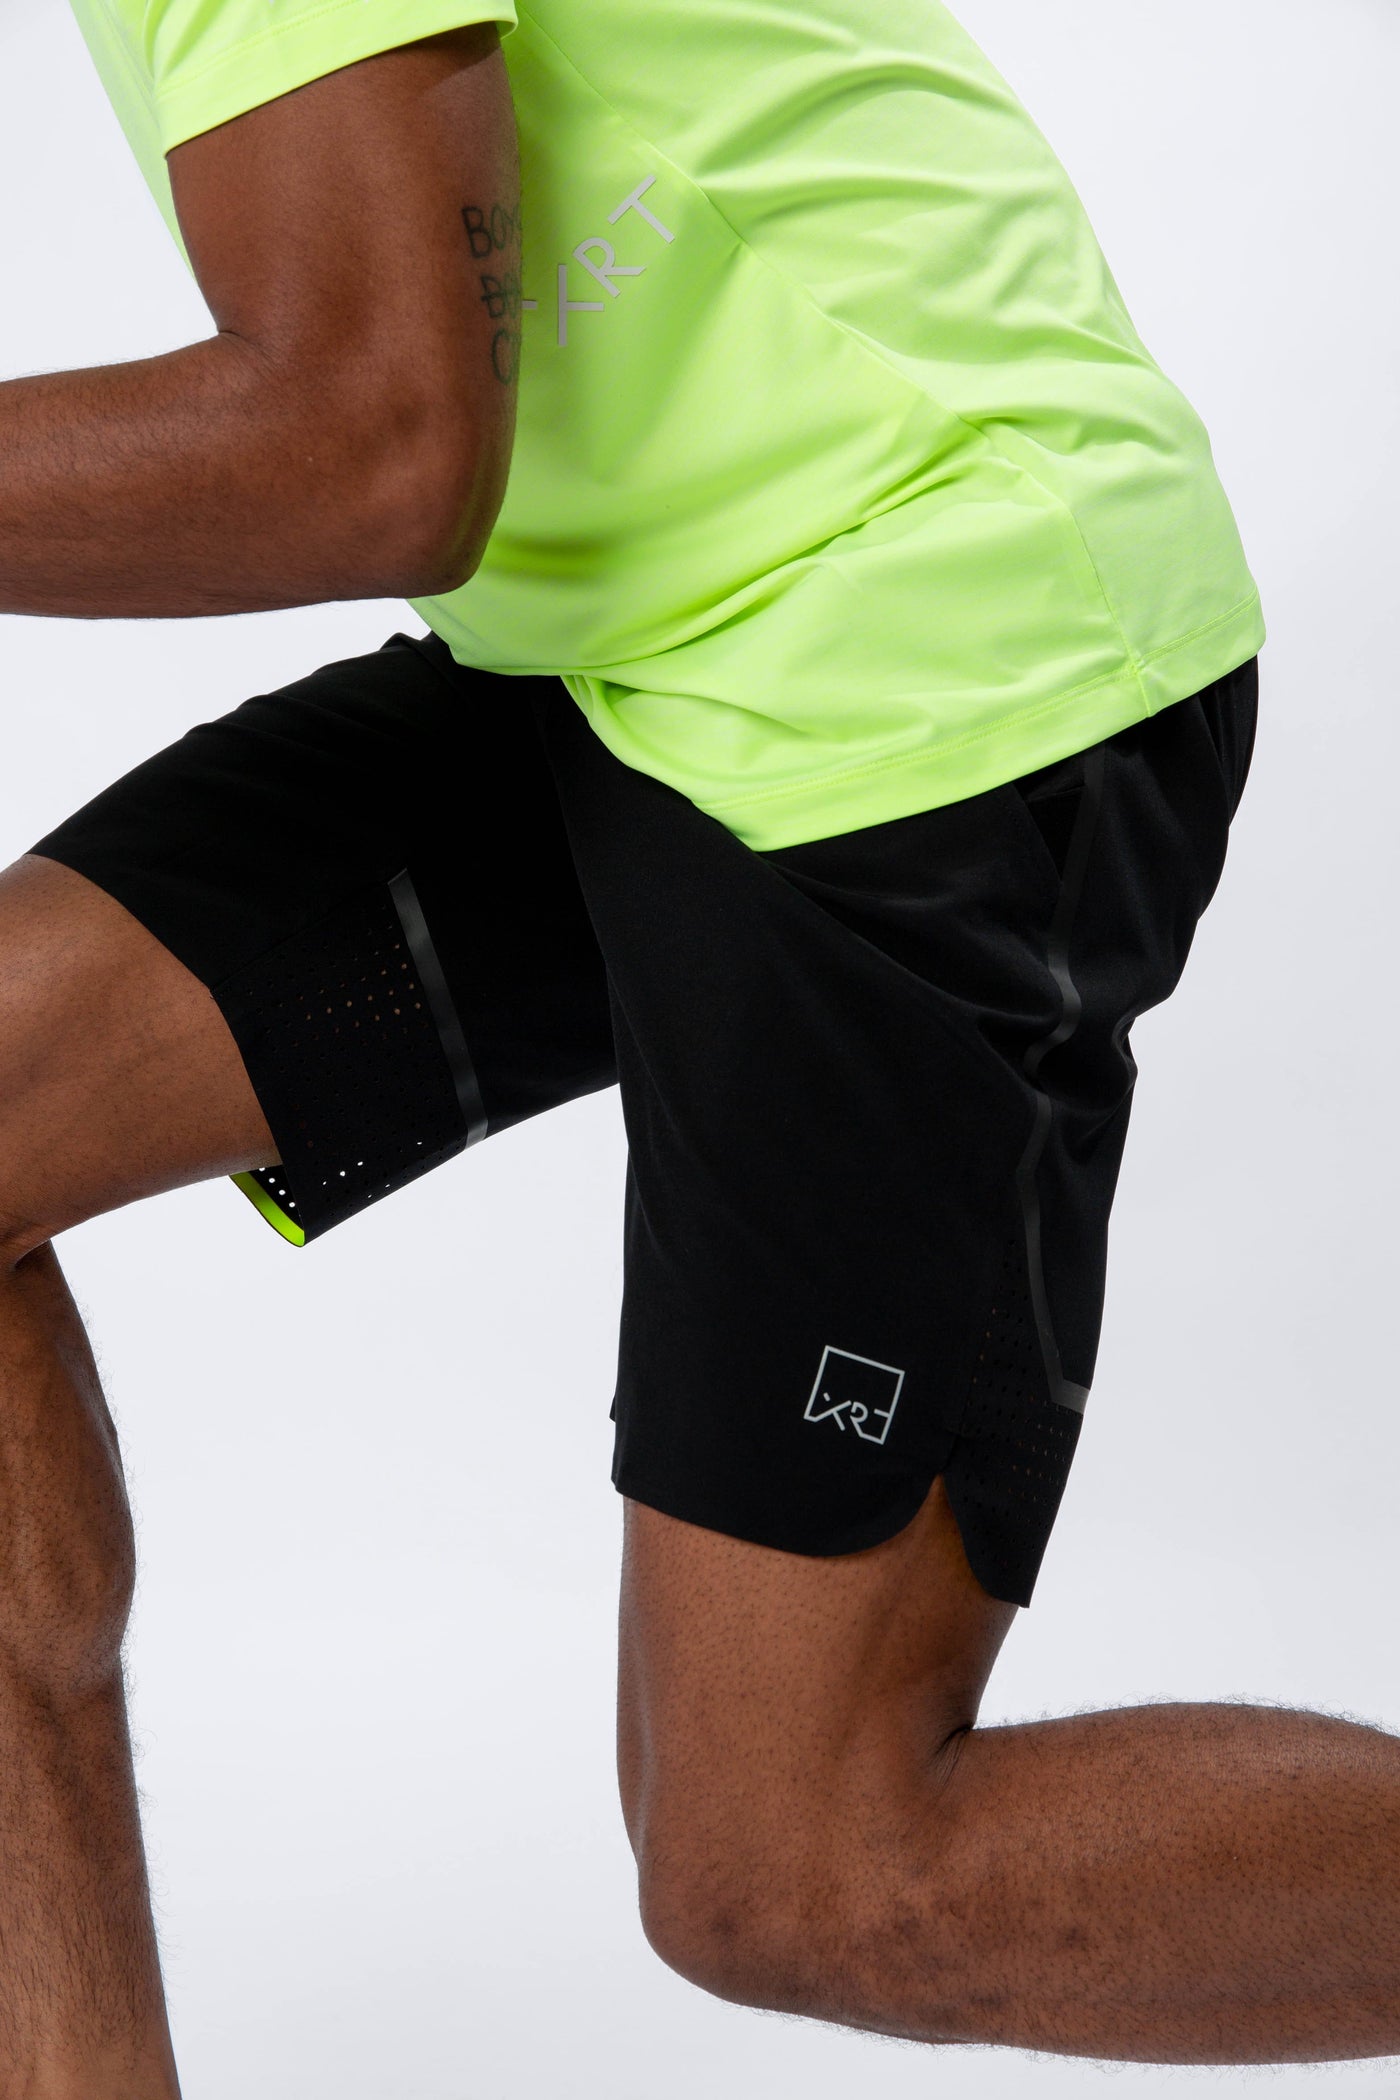 XRT Black gym shorts for men